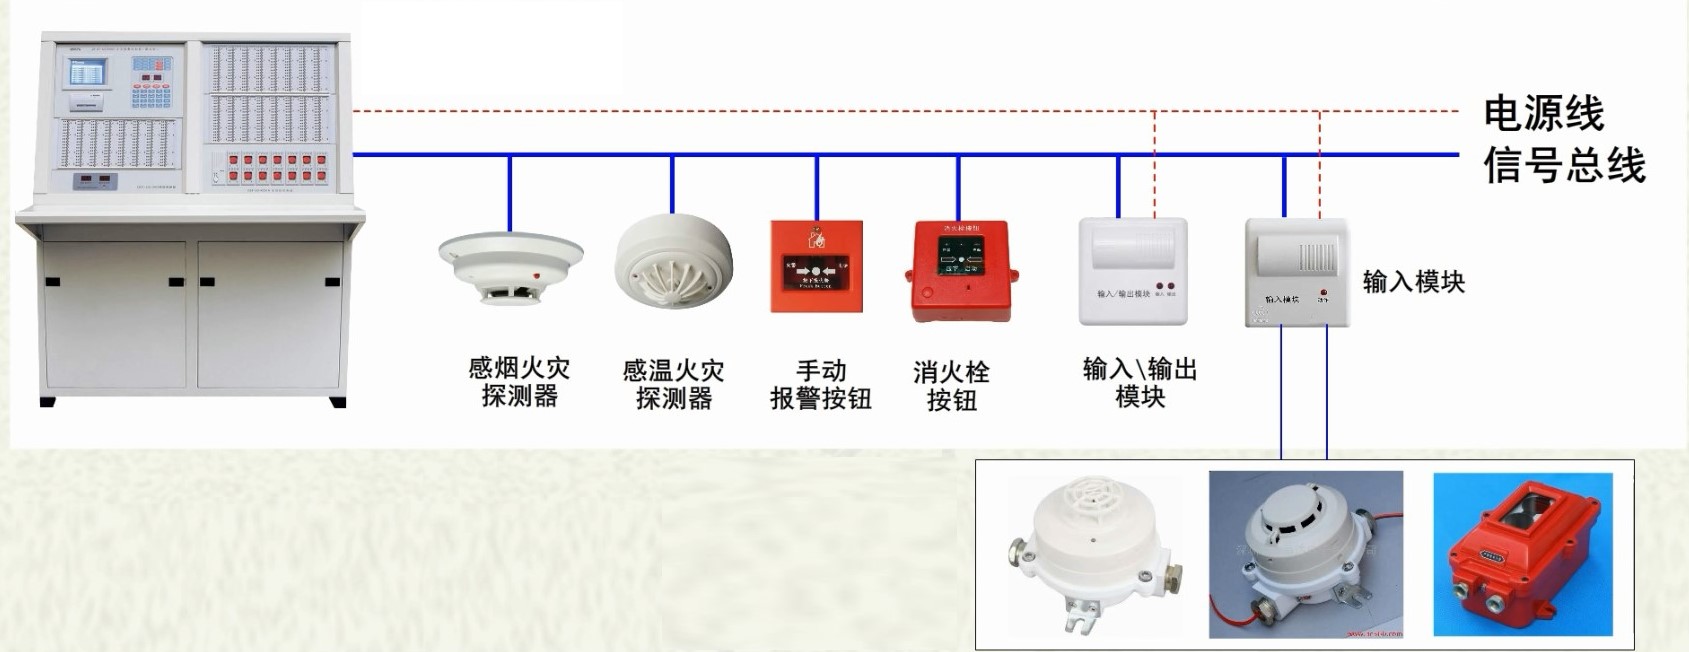 linkage addressable fire alarm system input module 